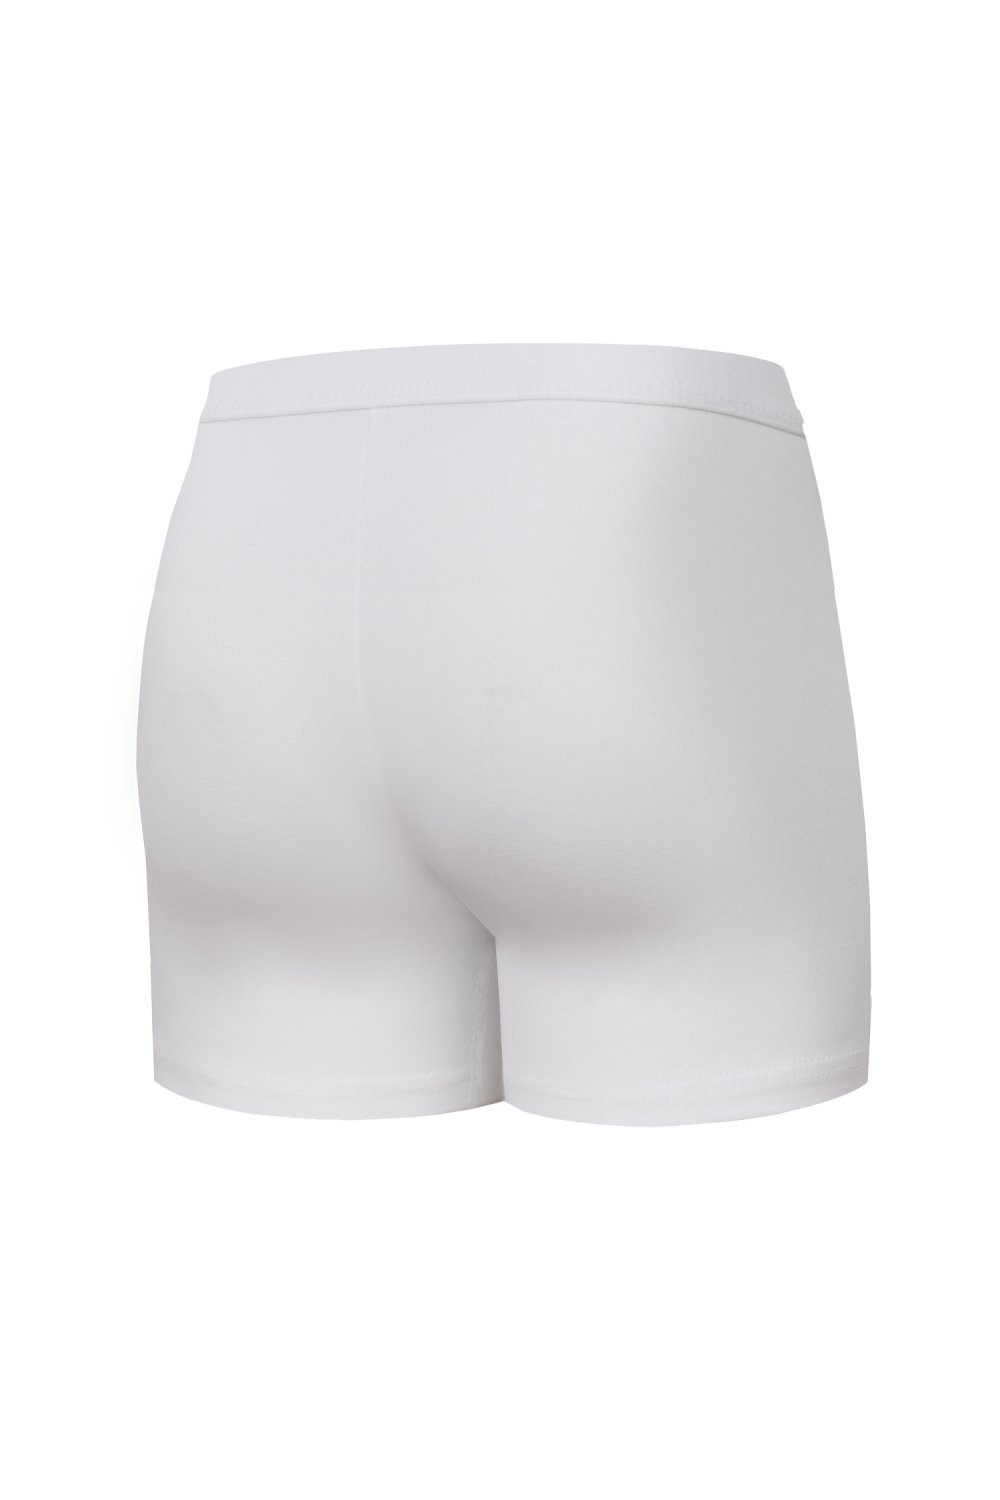 Pánské boxerky 092 Authentic plus white - CORNETTE Bílá 3XL